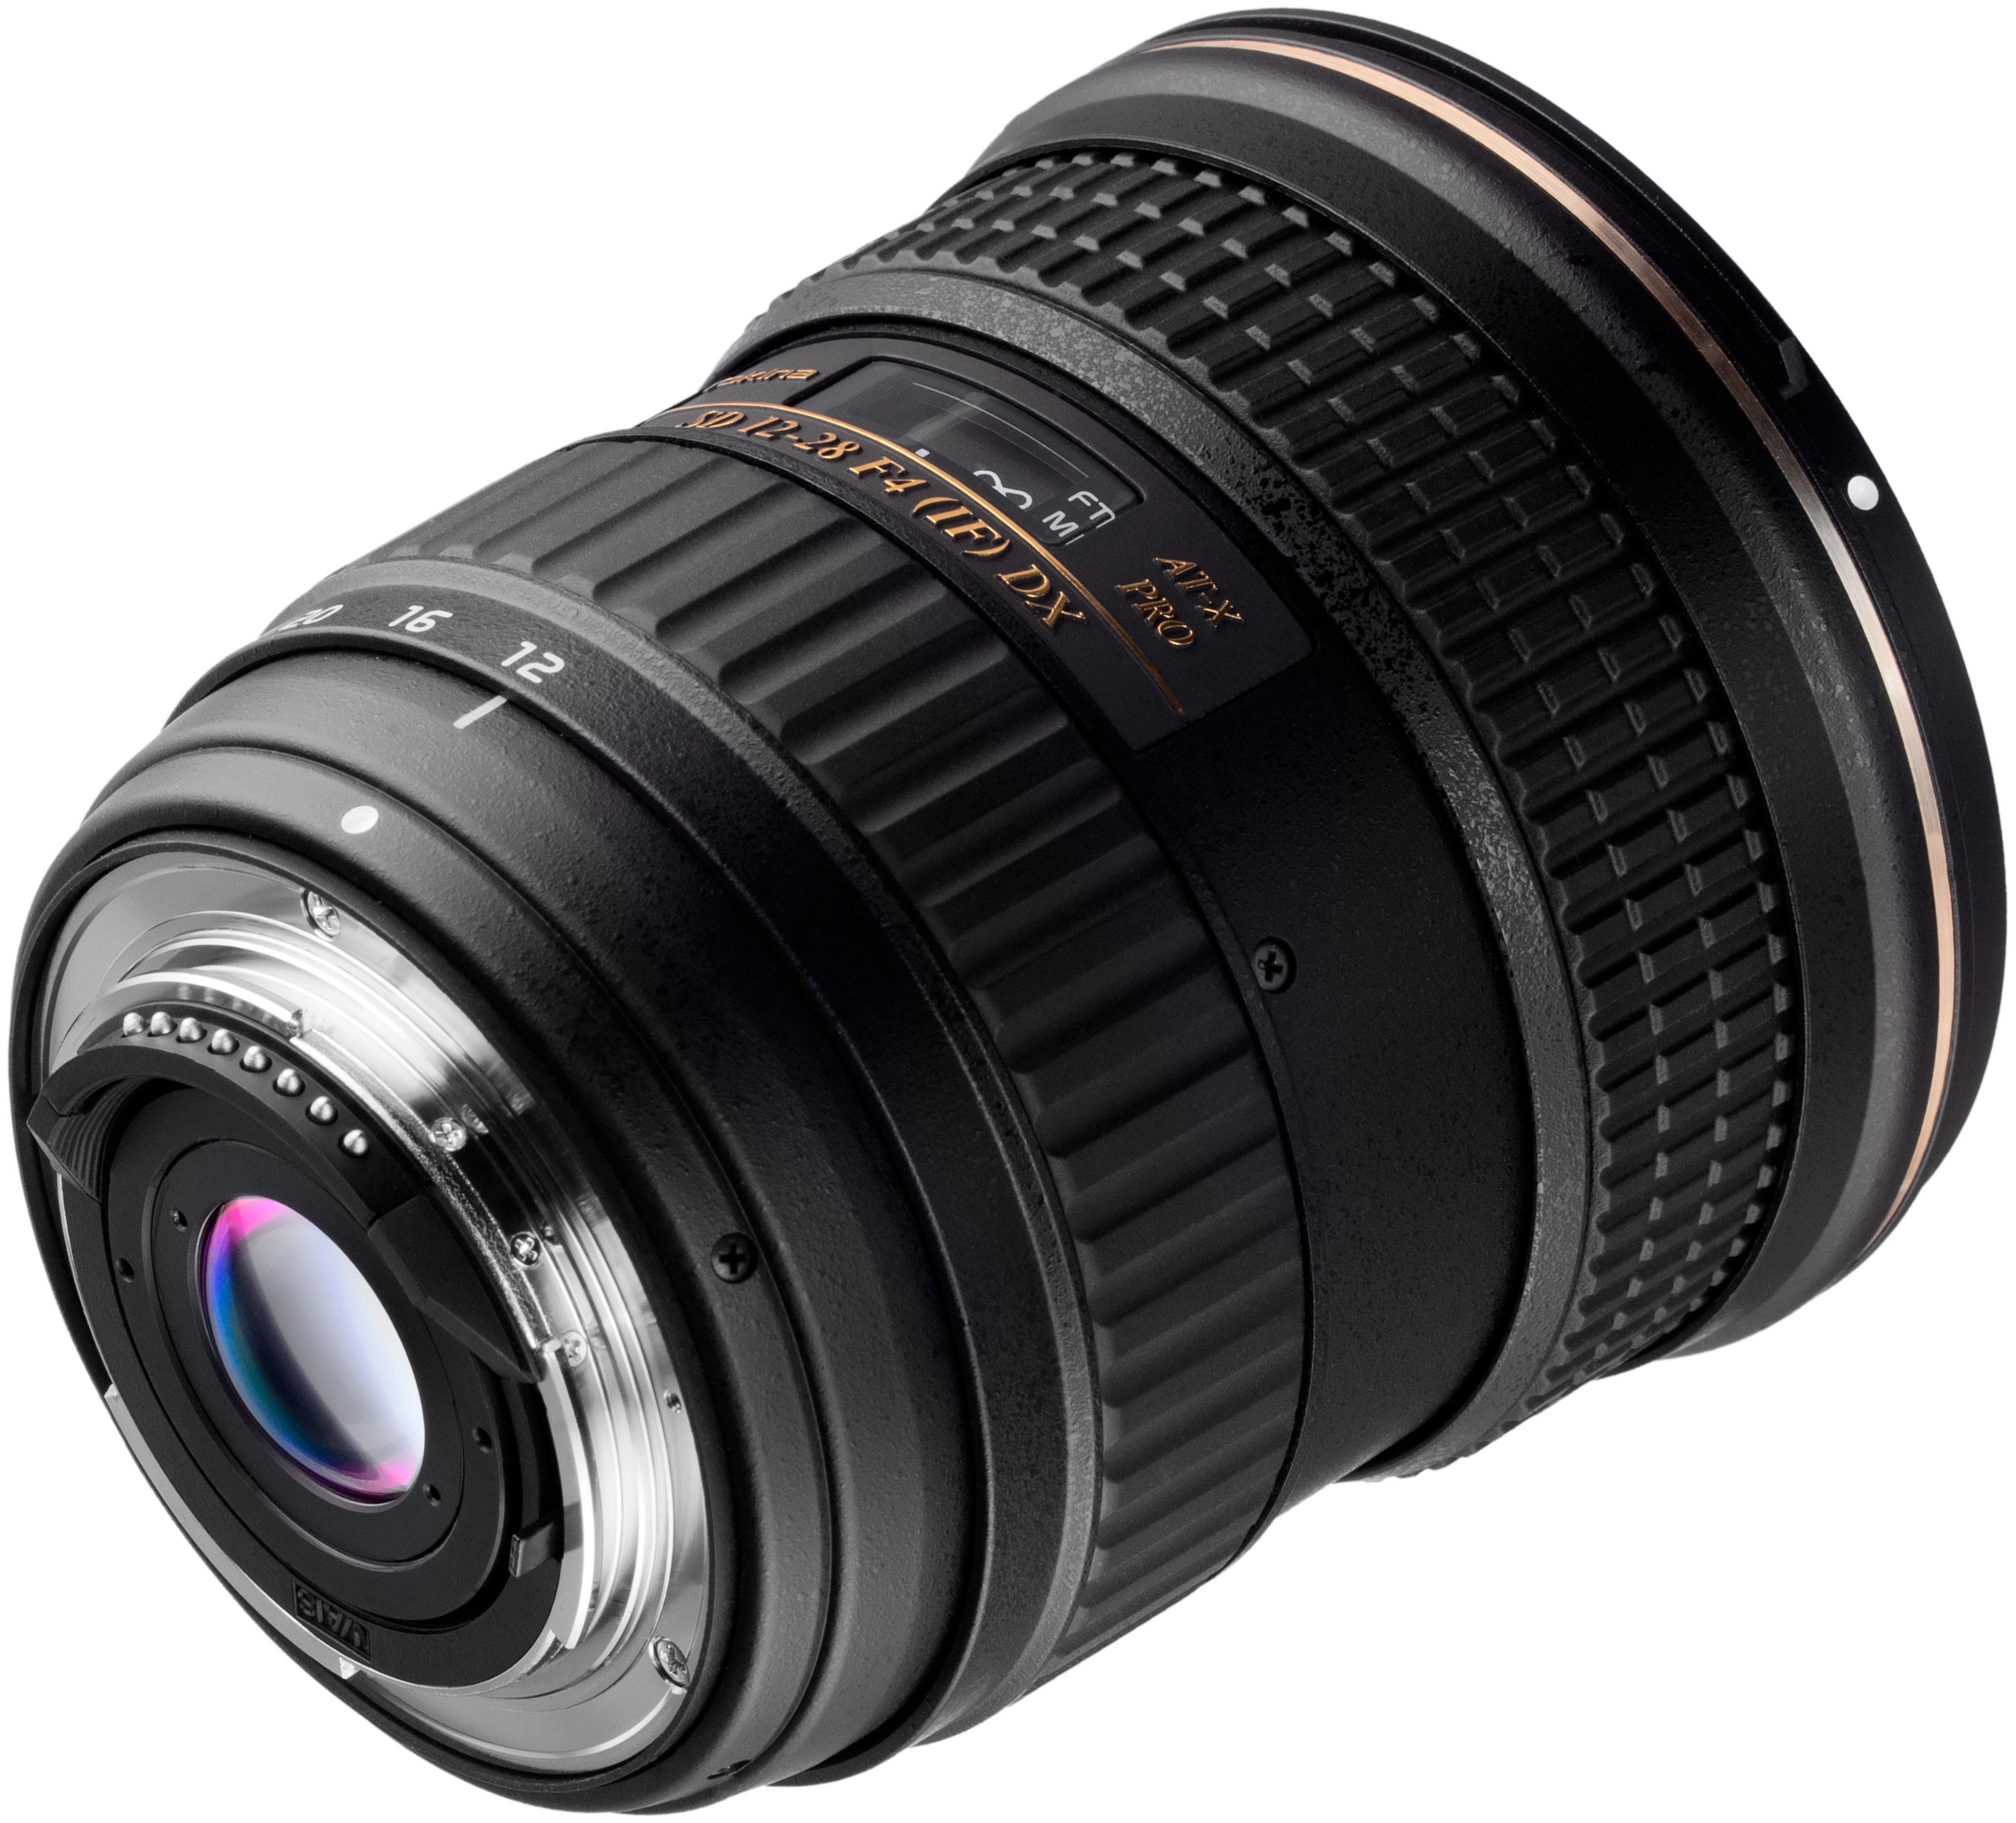 Объектив Tokina AT-X 128 F4 PRO DX  N/AF-D (12-28mm) для Nikon